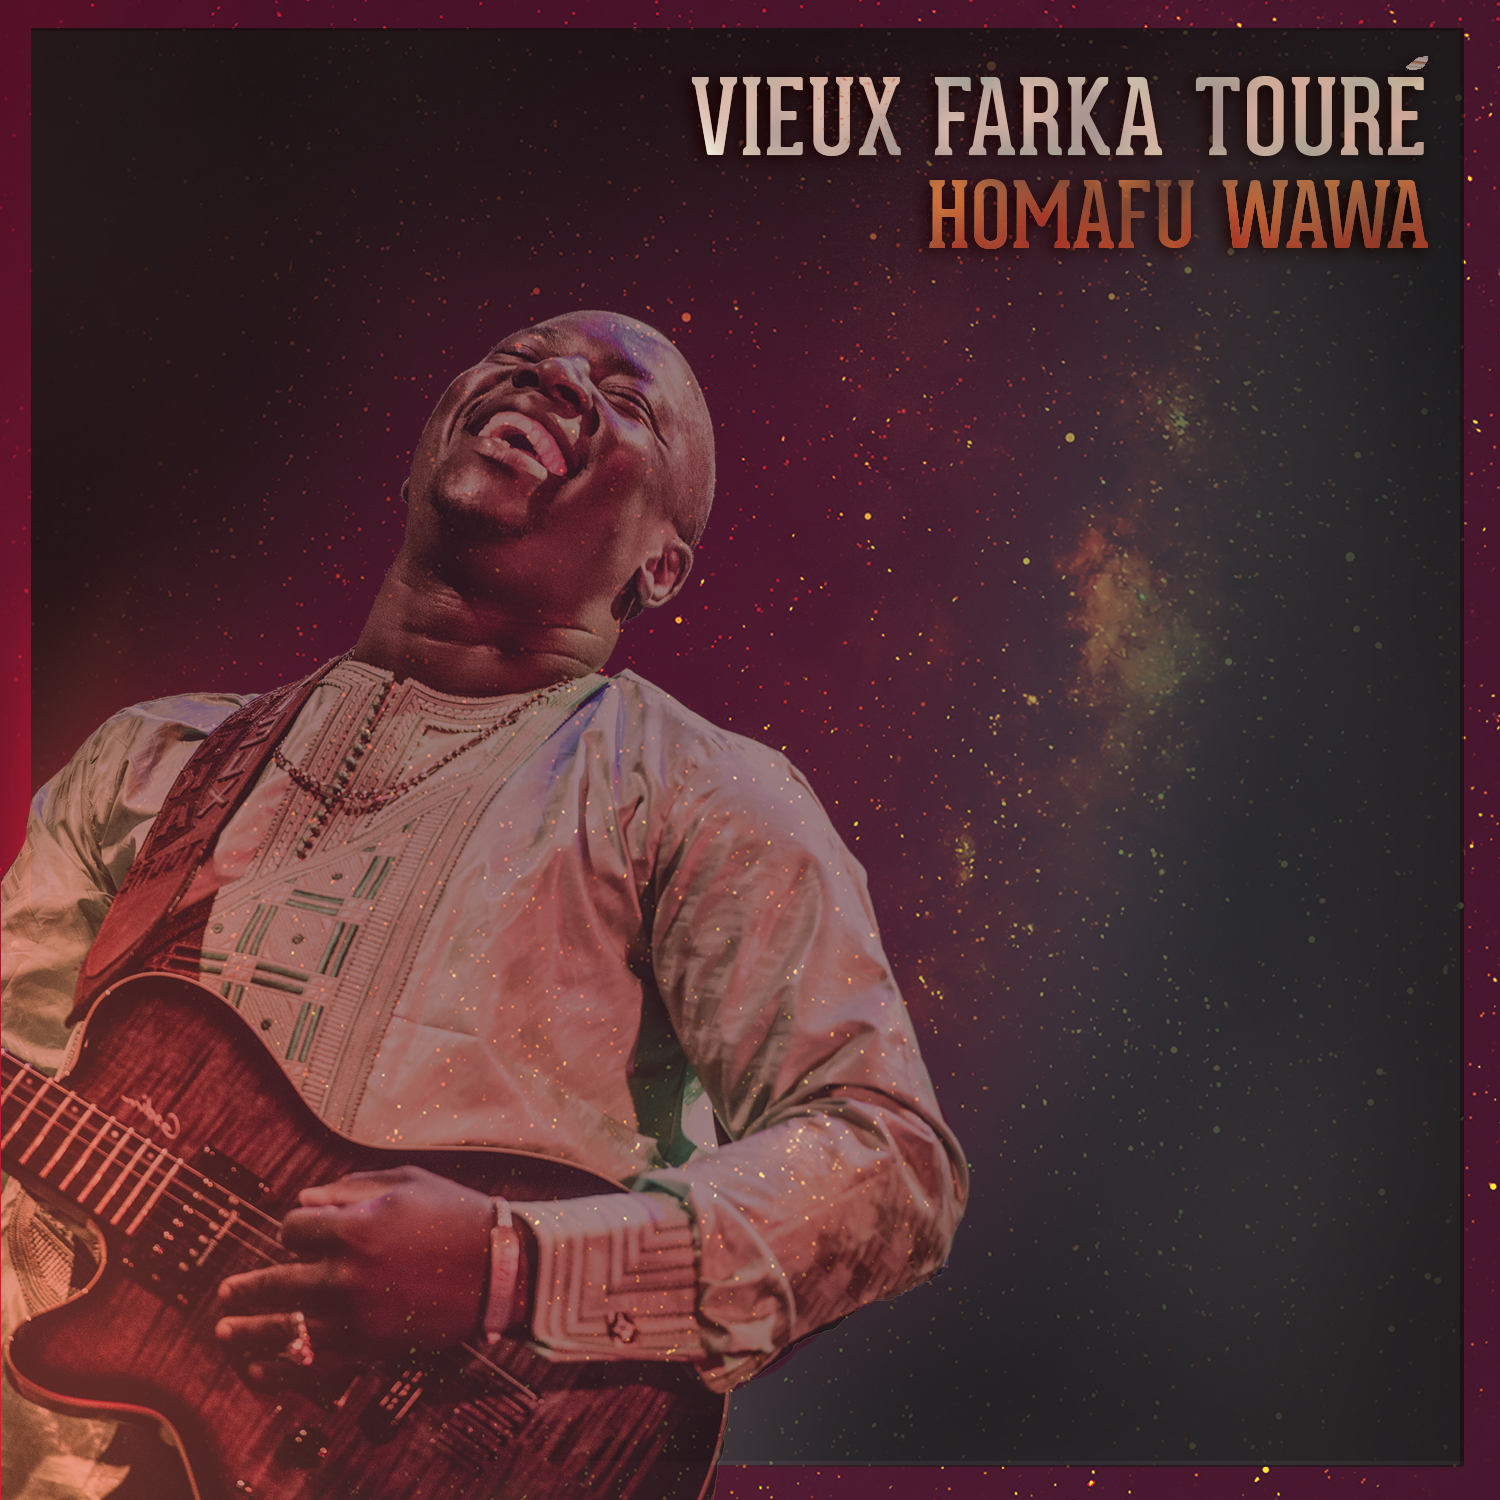 Vieux Farka Touré’s new single is now available